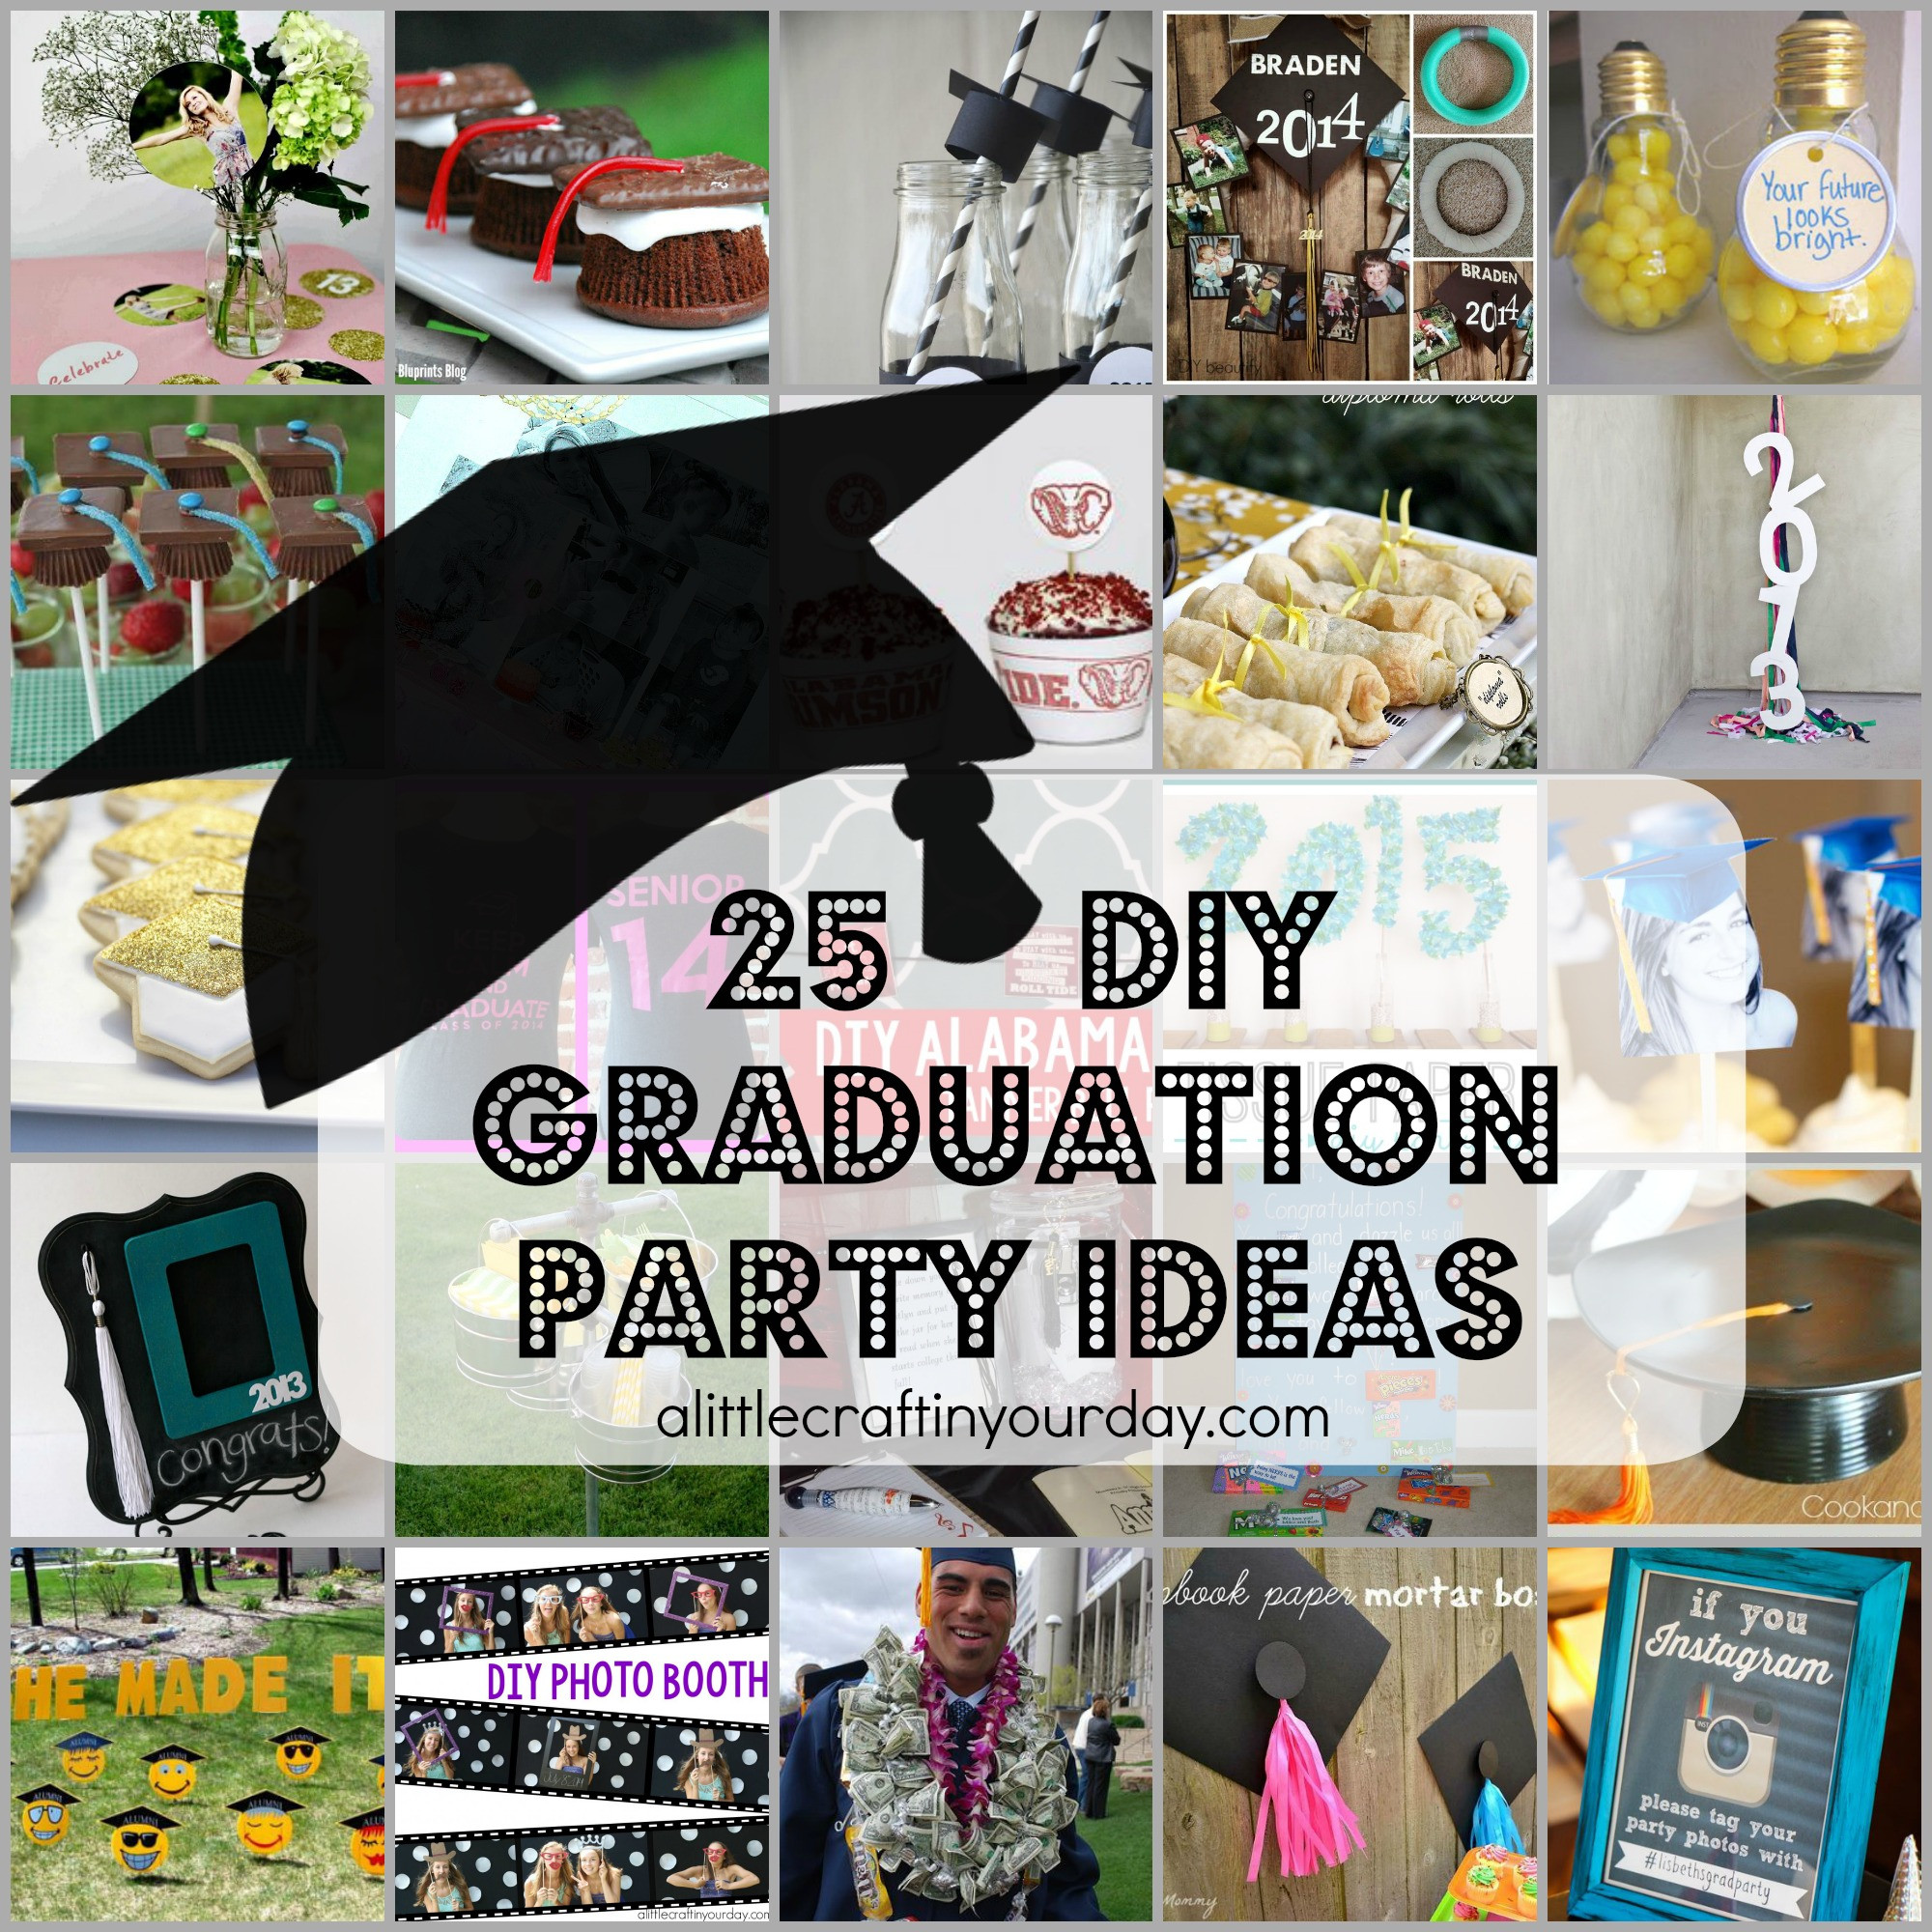 Boy High School Graduation Party Ideas
 25 DIY Graduation Party Ideas A Little Craft In Your Day